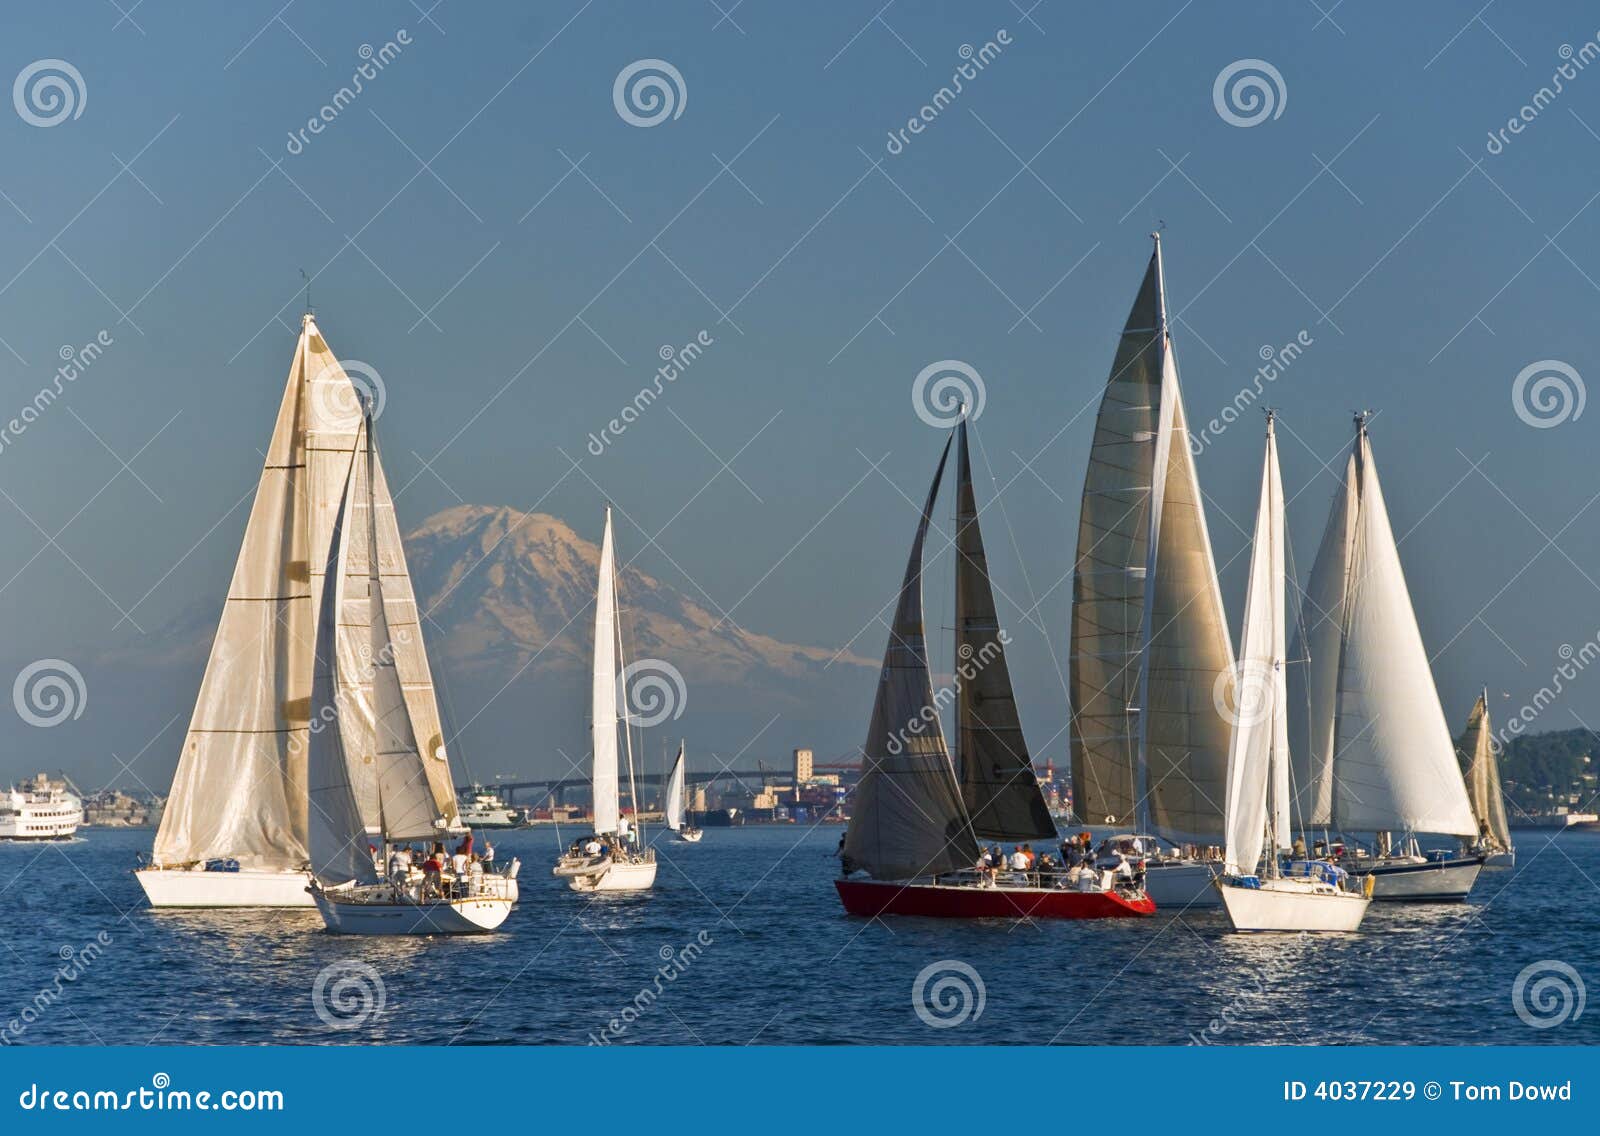 sailboats in elliot bay